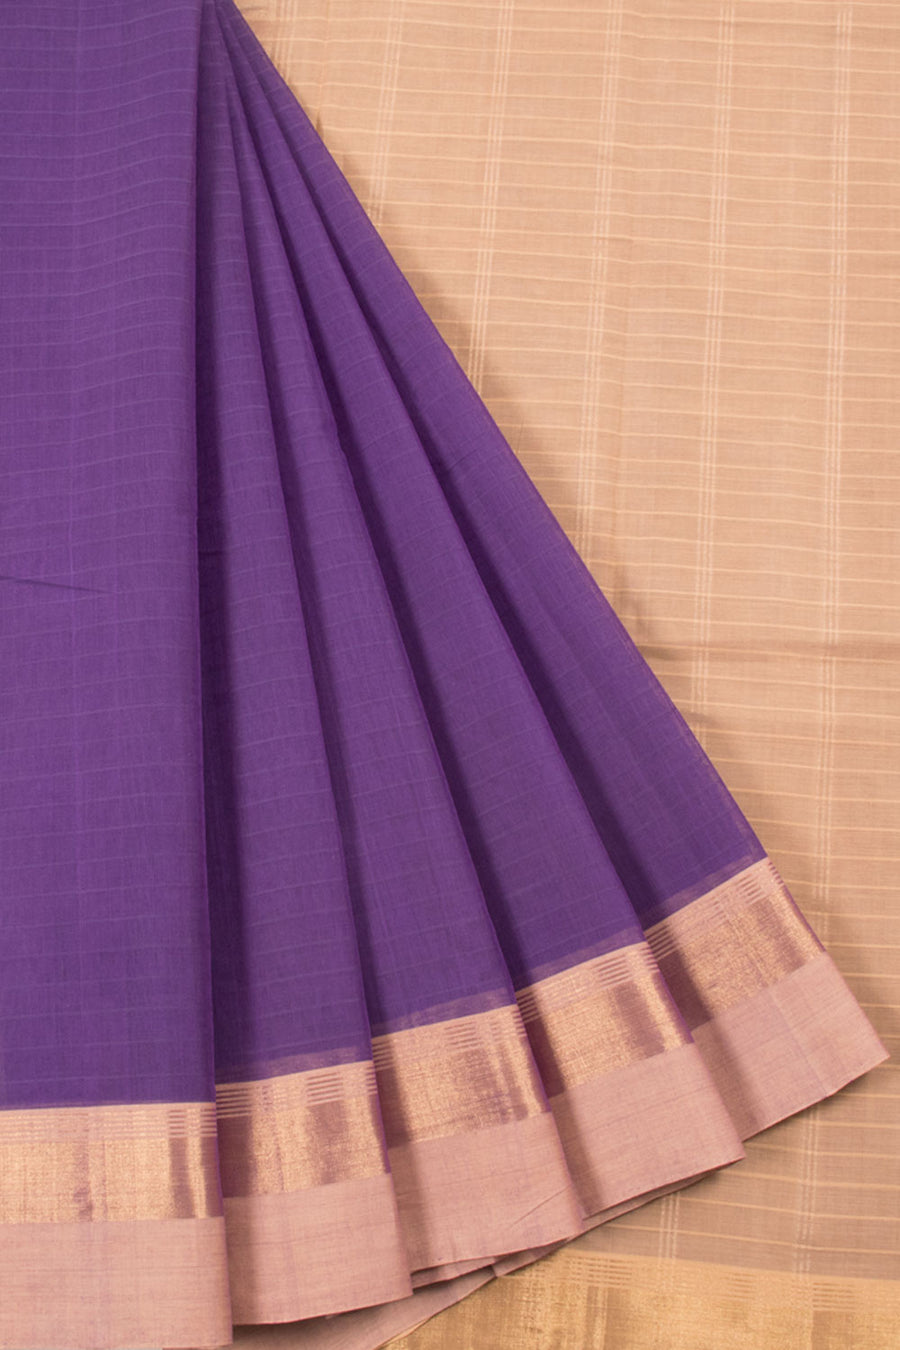 Violet Handwoven Negamum Cotton Saree with Stripes Design, Zari Border and Contrast Blouse and Pallu